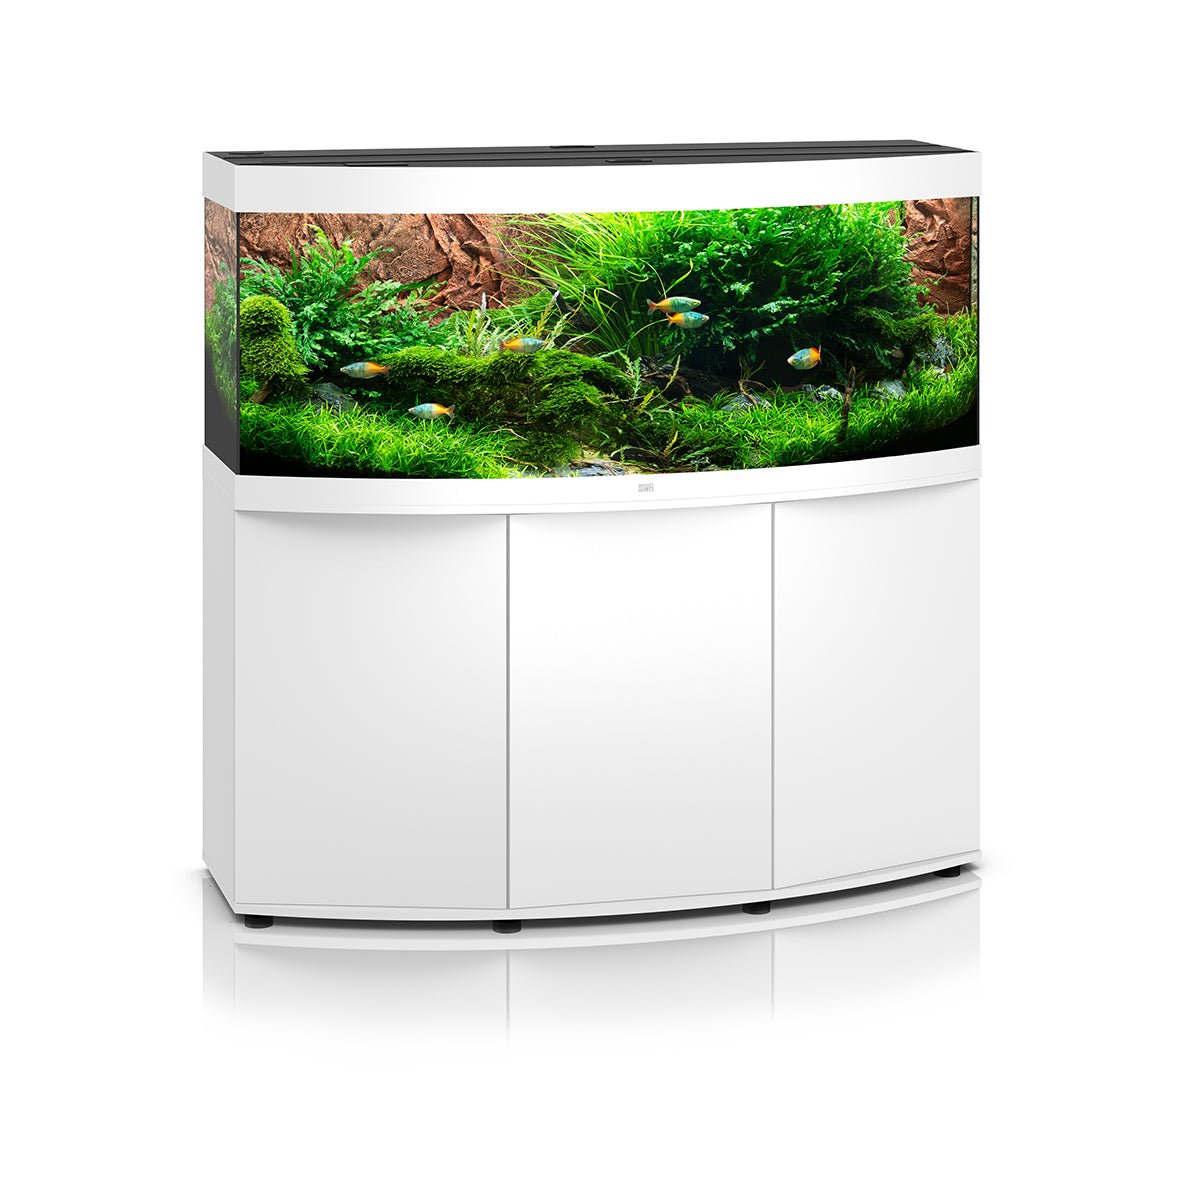 Juwel Vision 450 LED Aquarium and Cabinet (White) - Charterhouse Aquatics